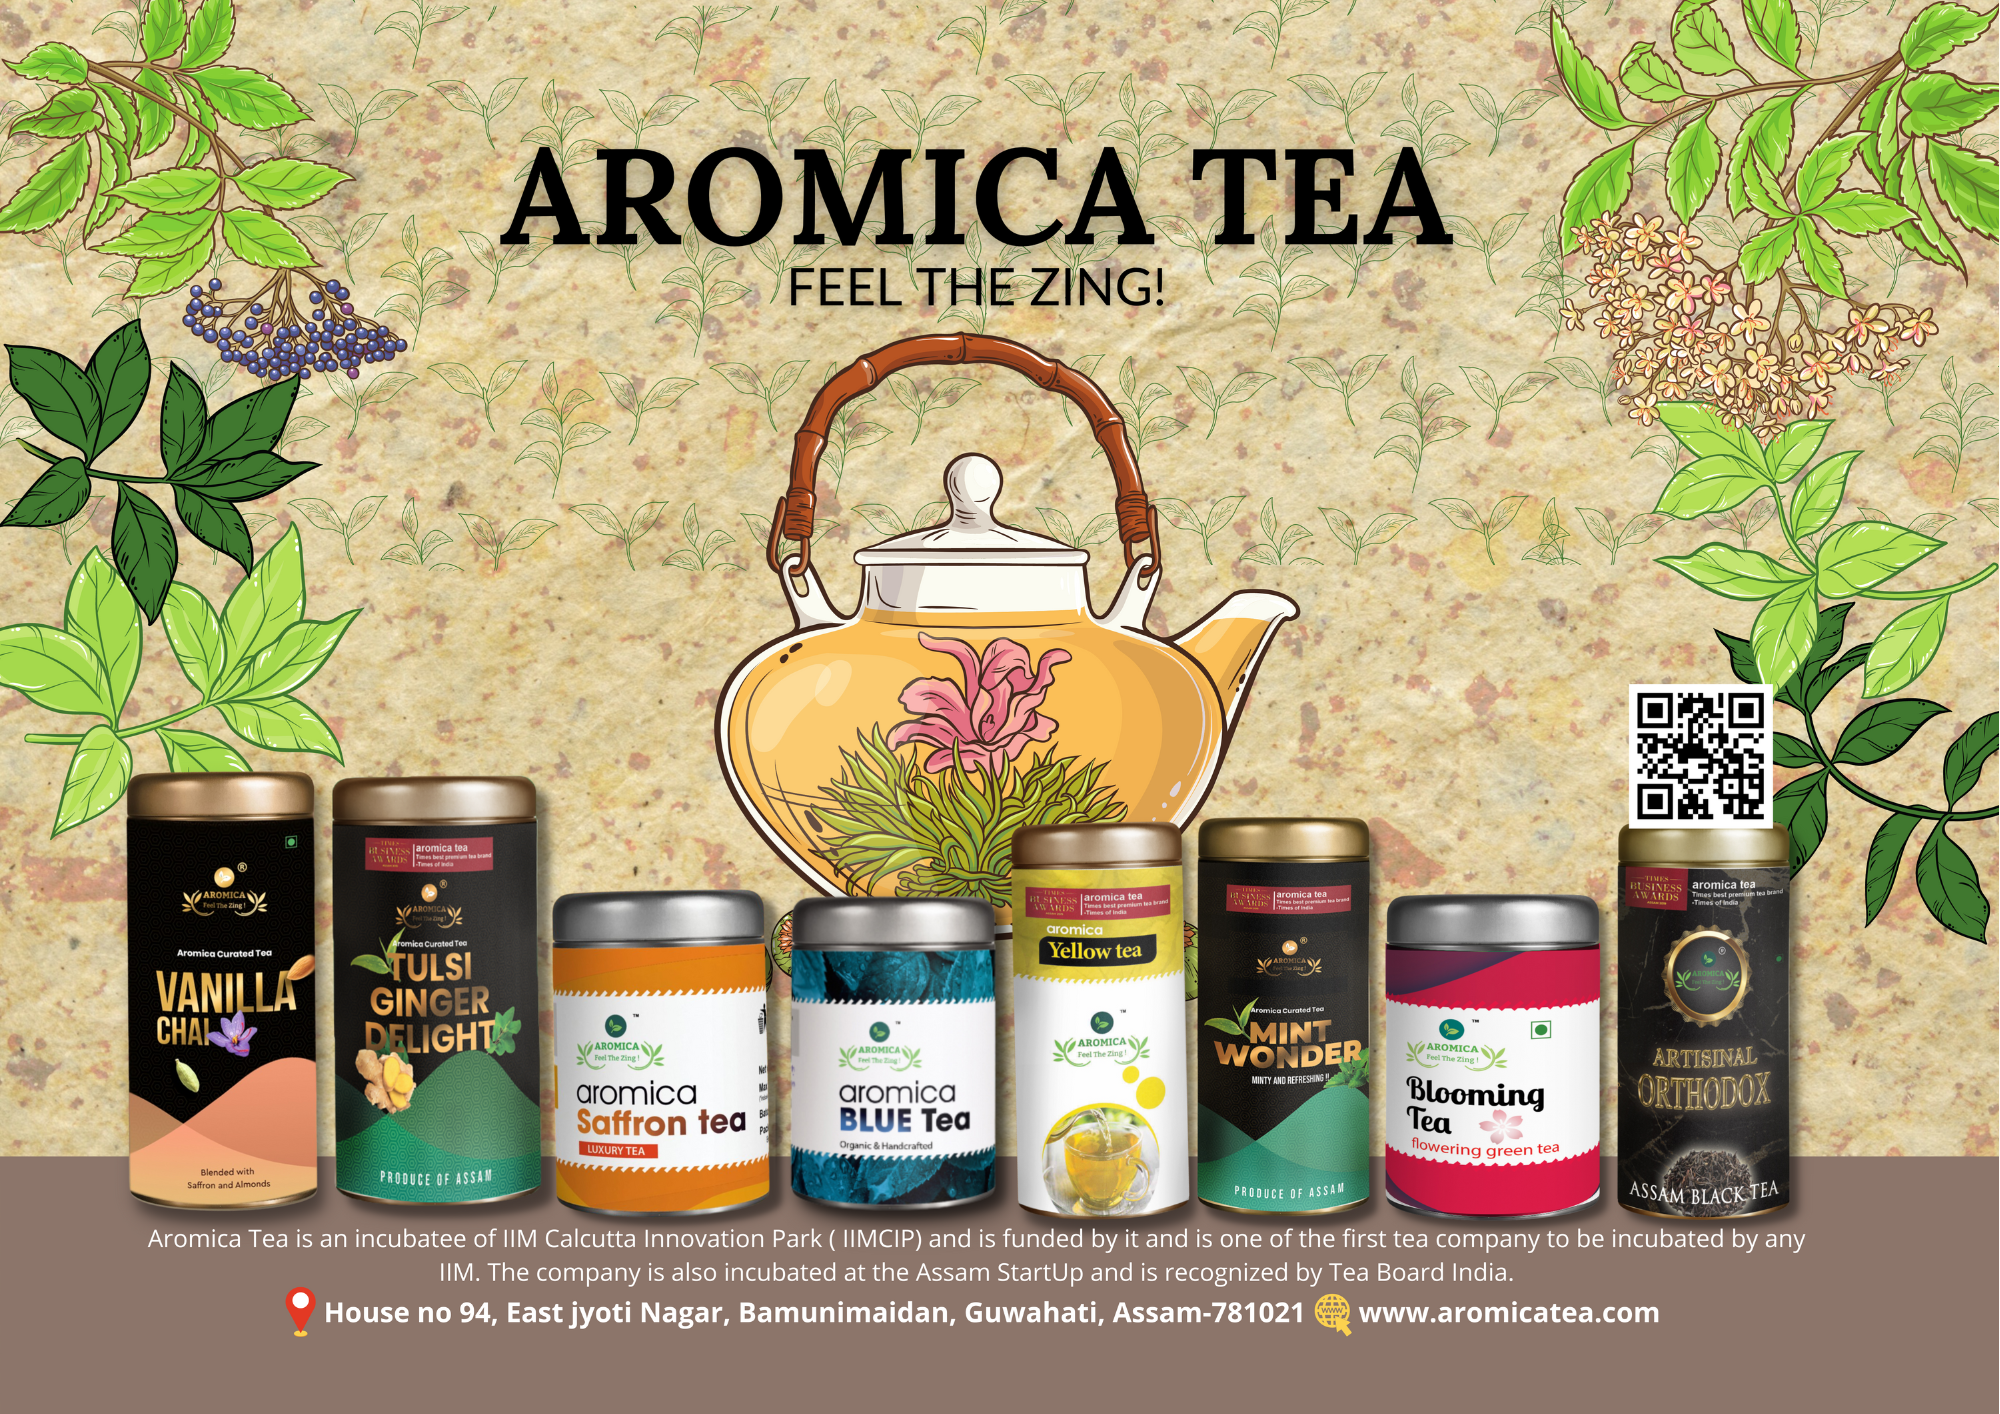 A REVOLUTION THAT FITS A TEA-Aromica Tea